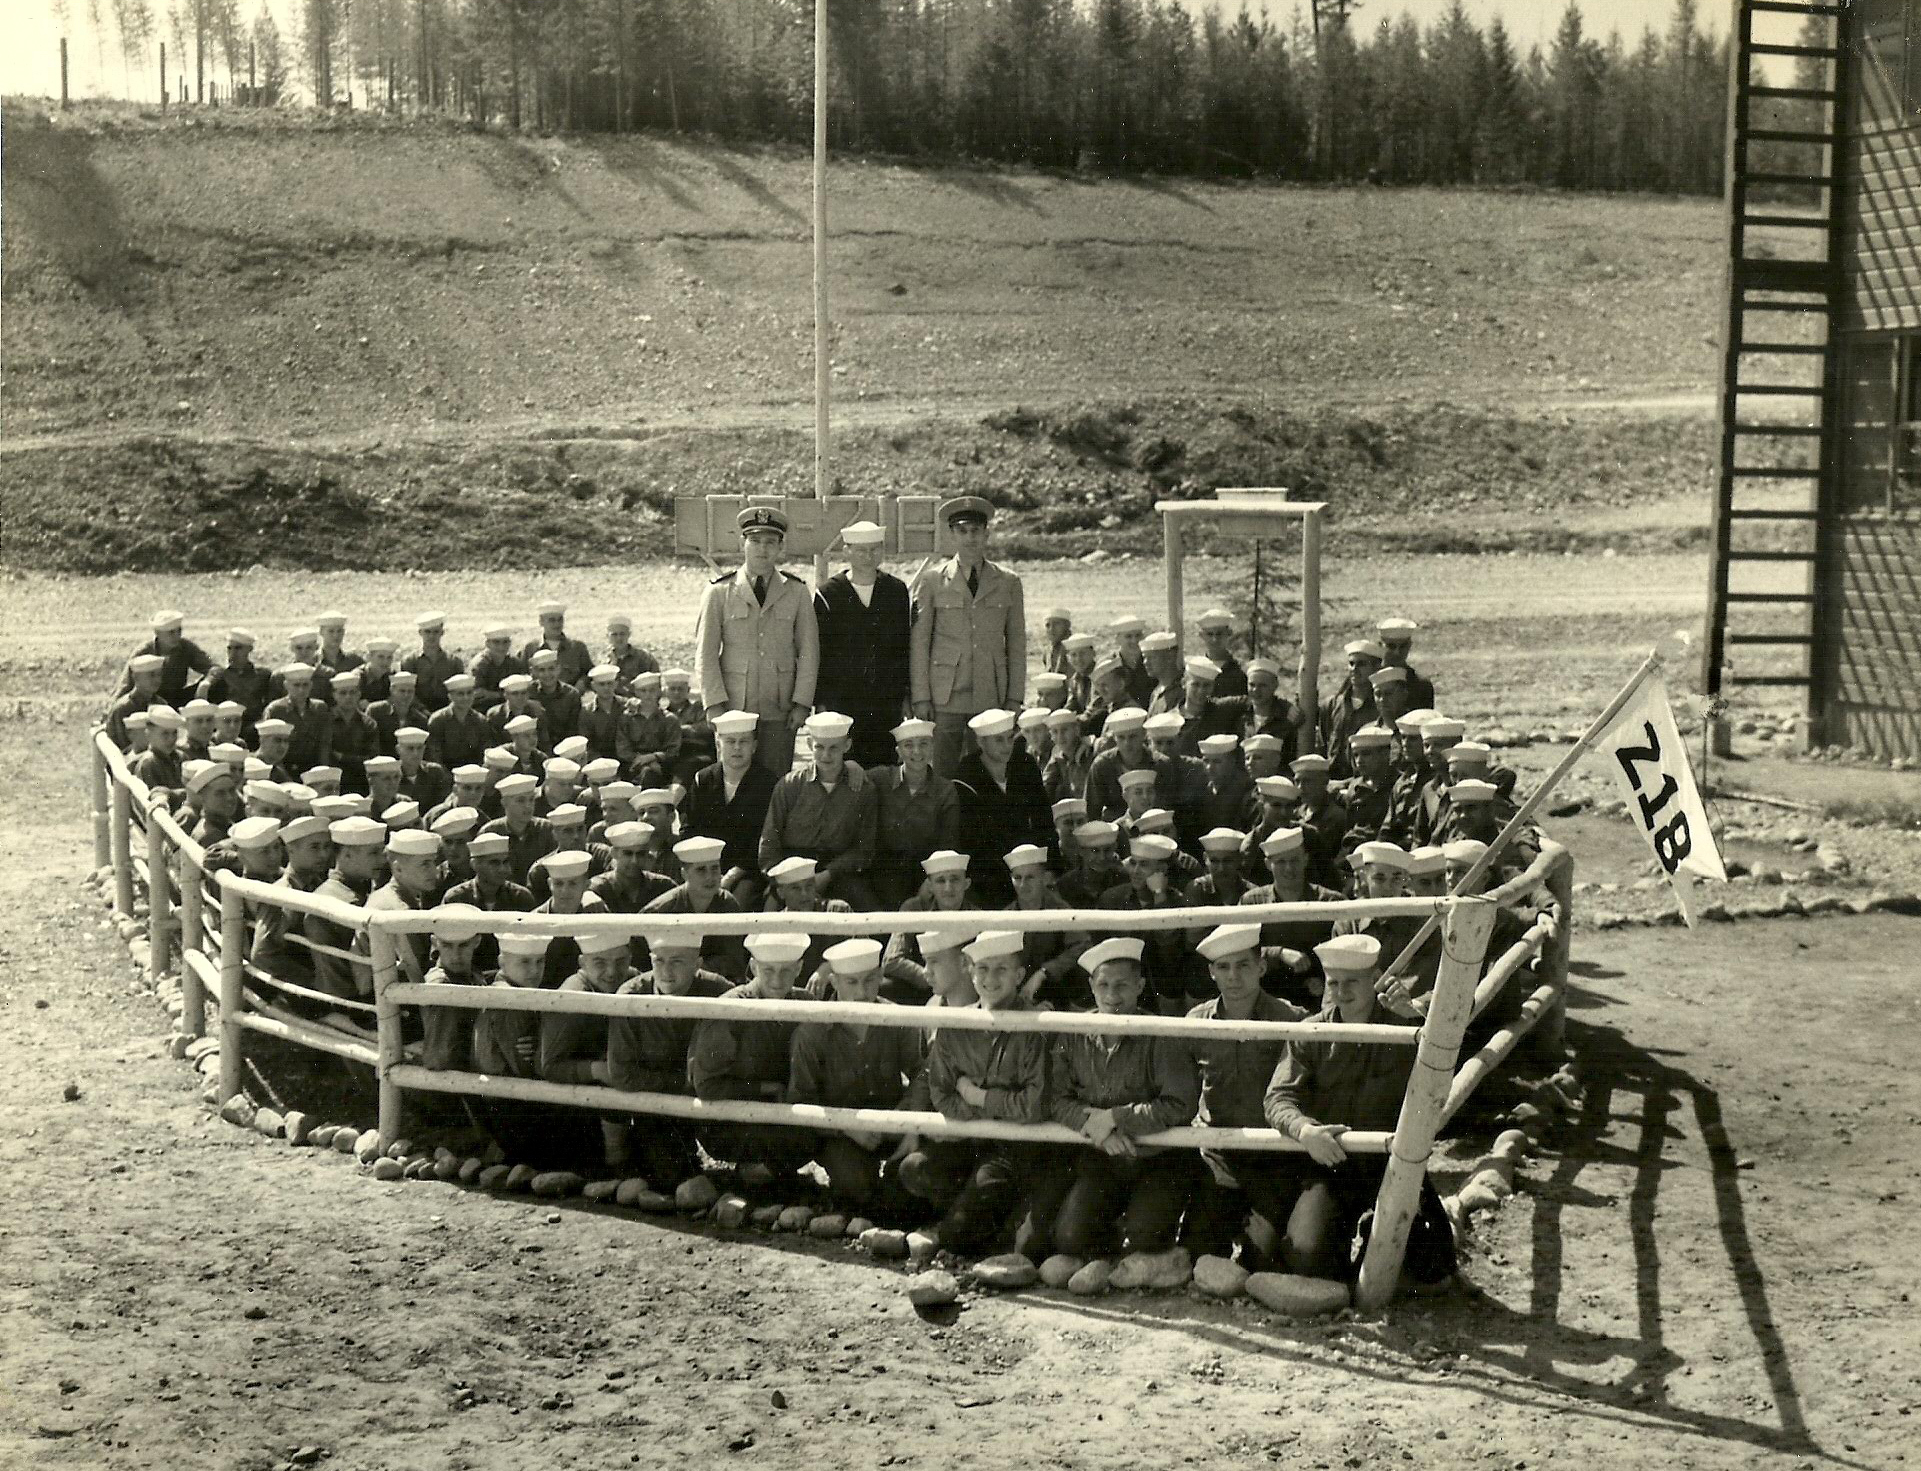 Farragut Naval Training Station, Idaho Class 218 ca. 1943. Image from the LCDR Julia Anna Muraresku (Bricker) Collection, USN Nurse Corps (1941-46).